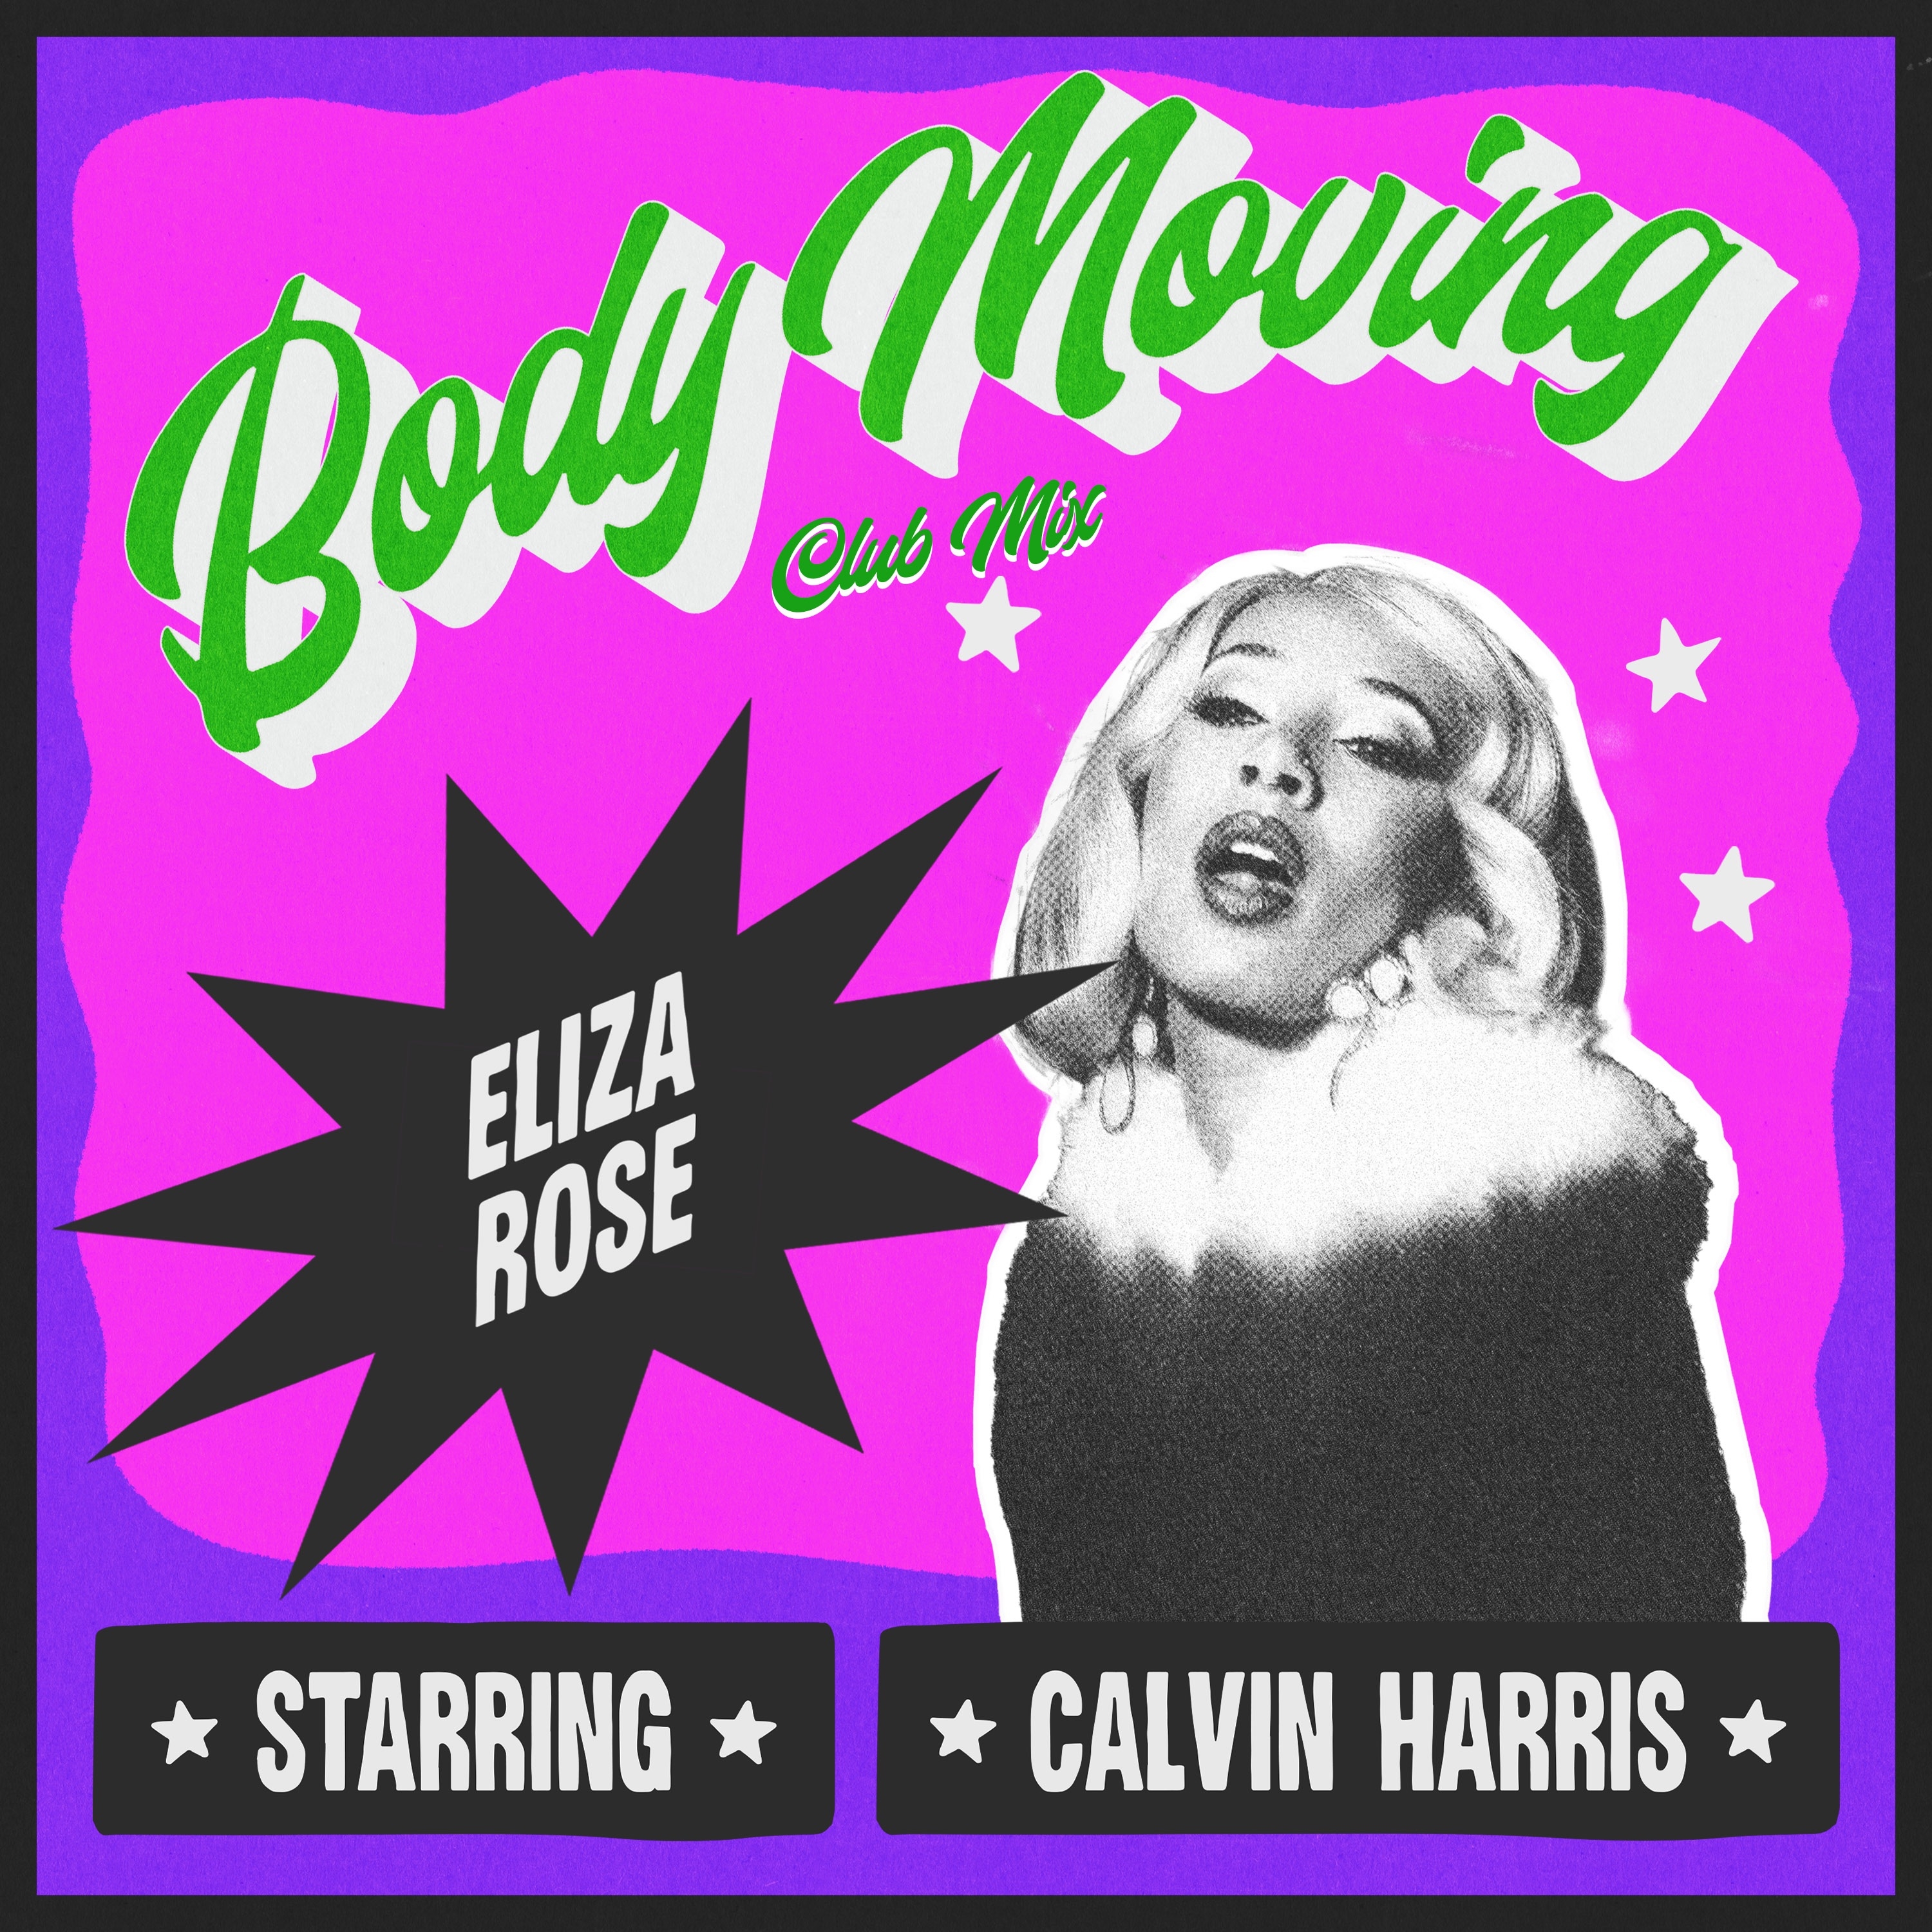 Eliza Rose & Calvin Harris - Body Moving (Club Mix)